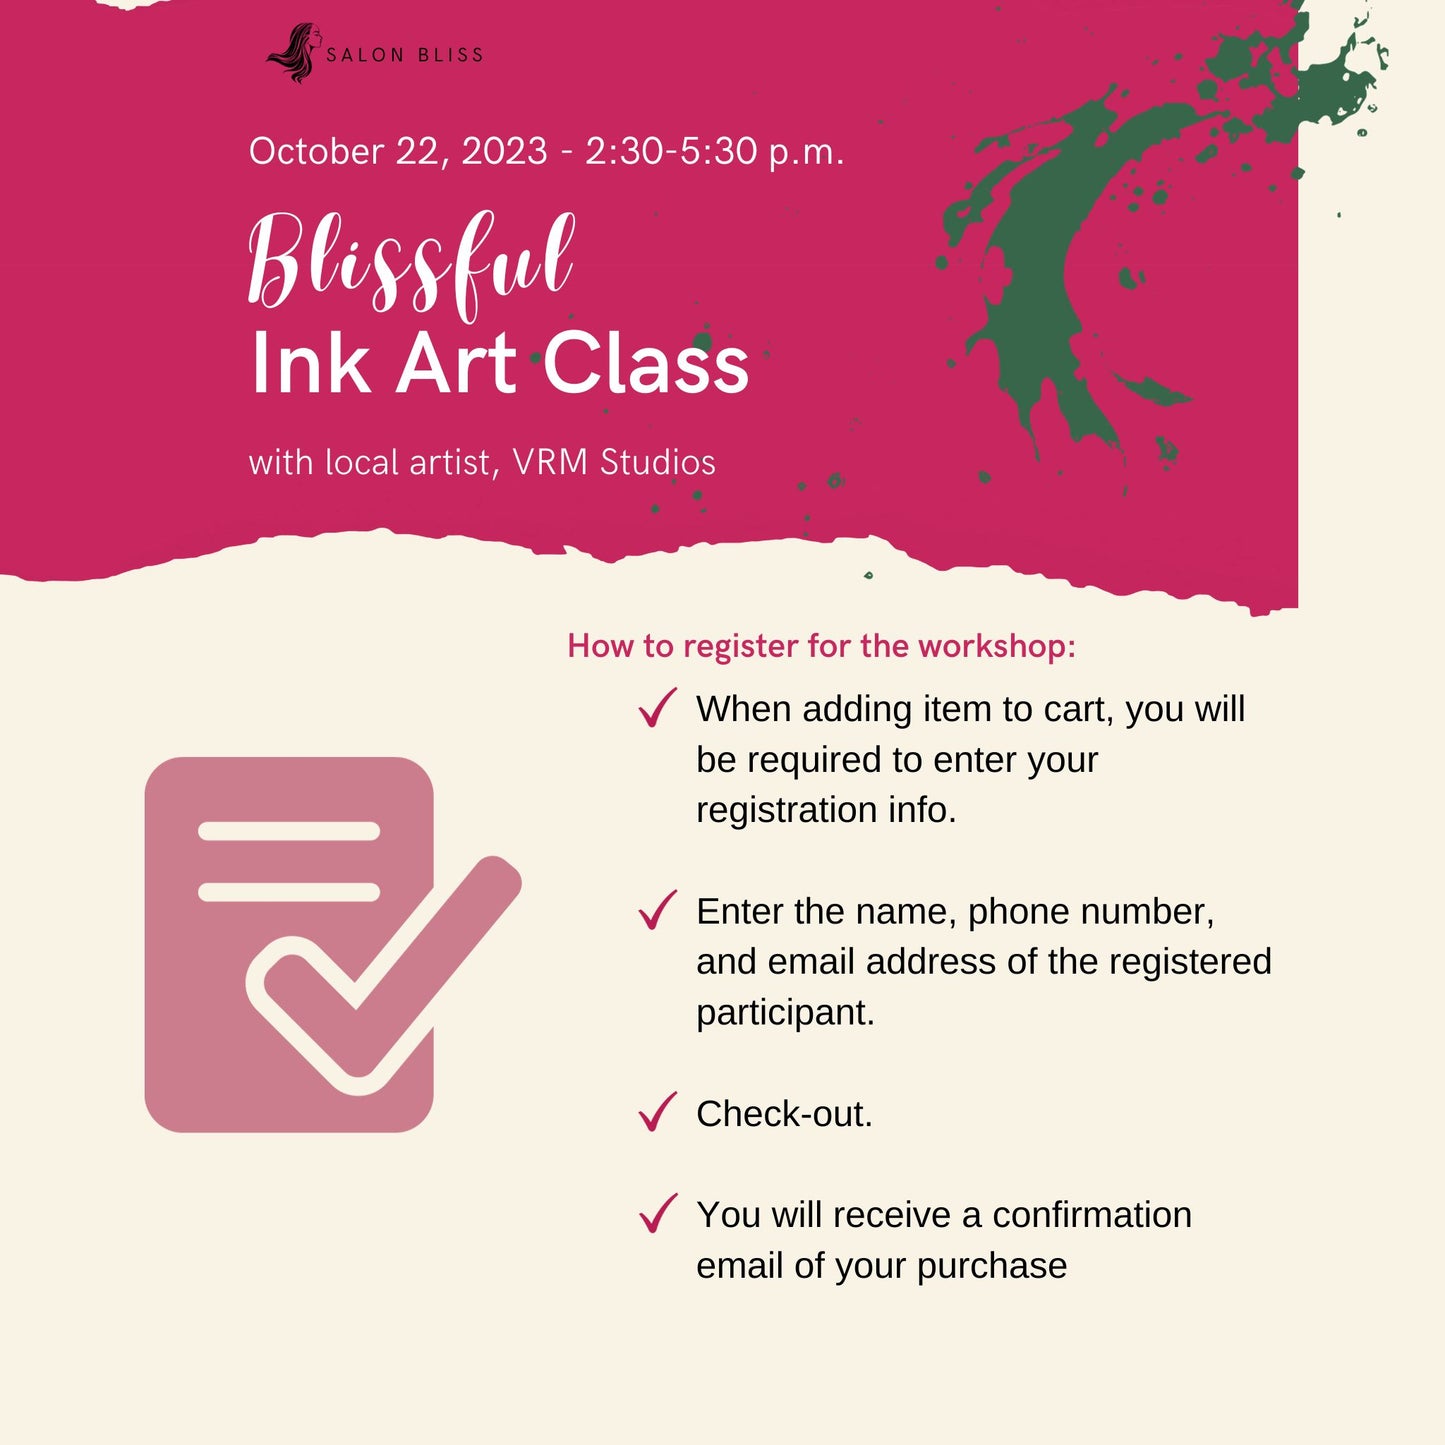 Blissful Ink Art Class - October 22, 2023 - 1 Seat Registration